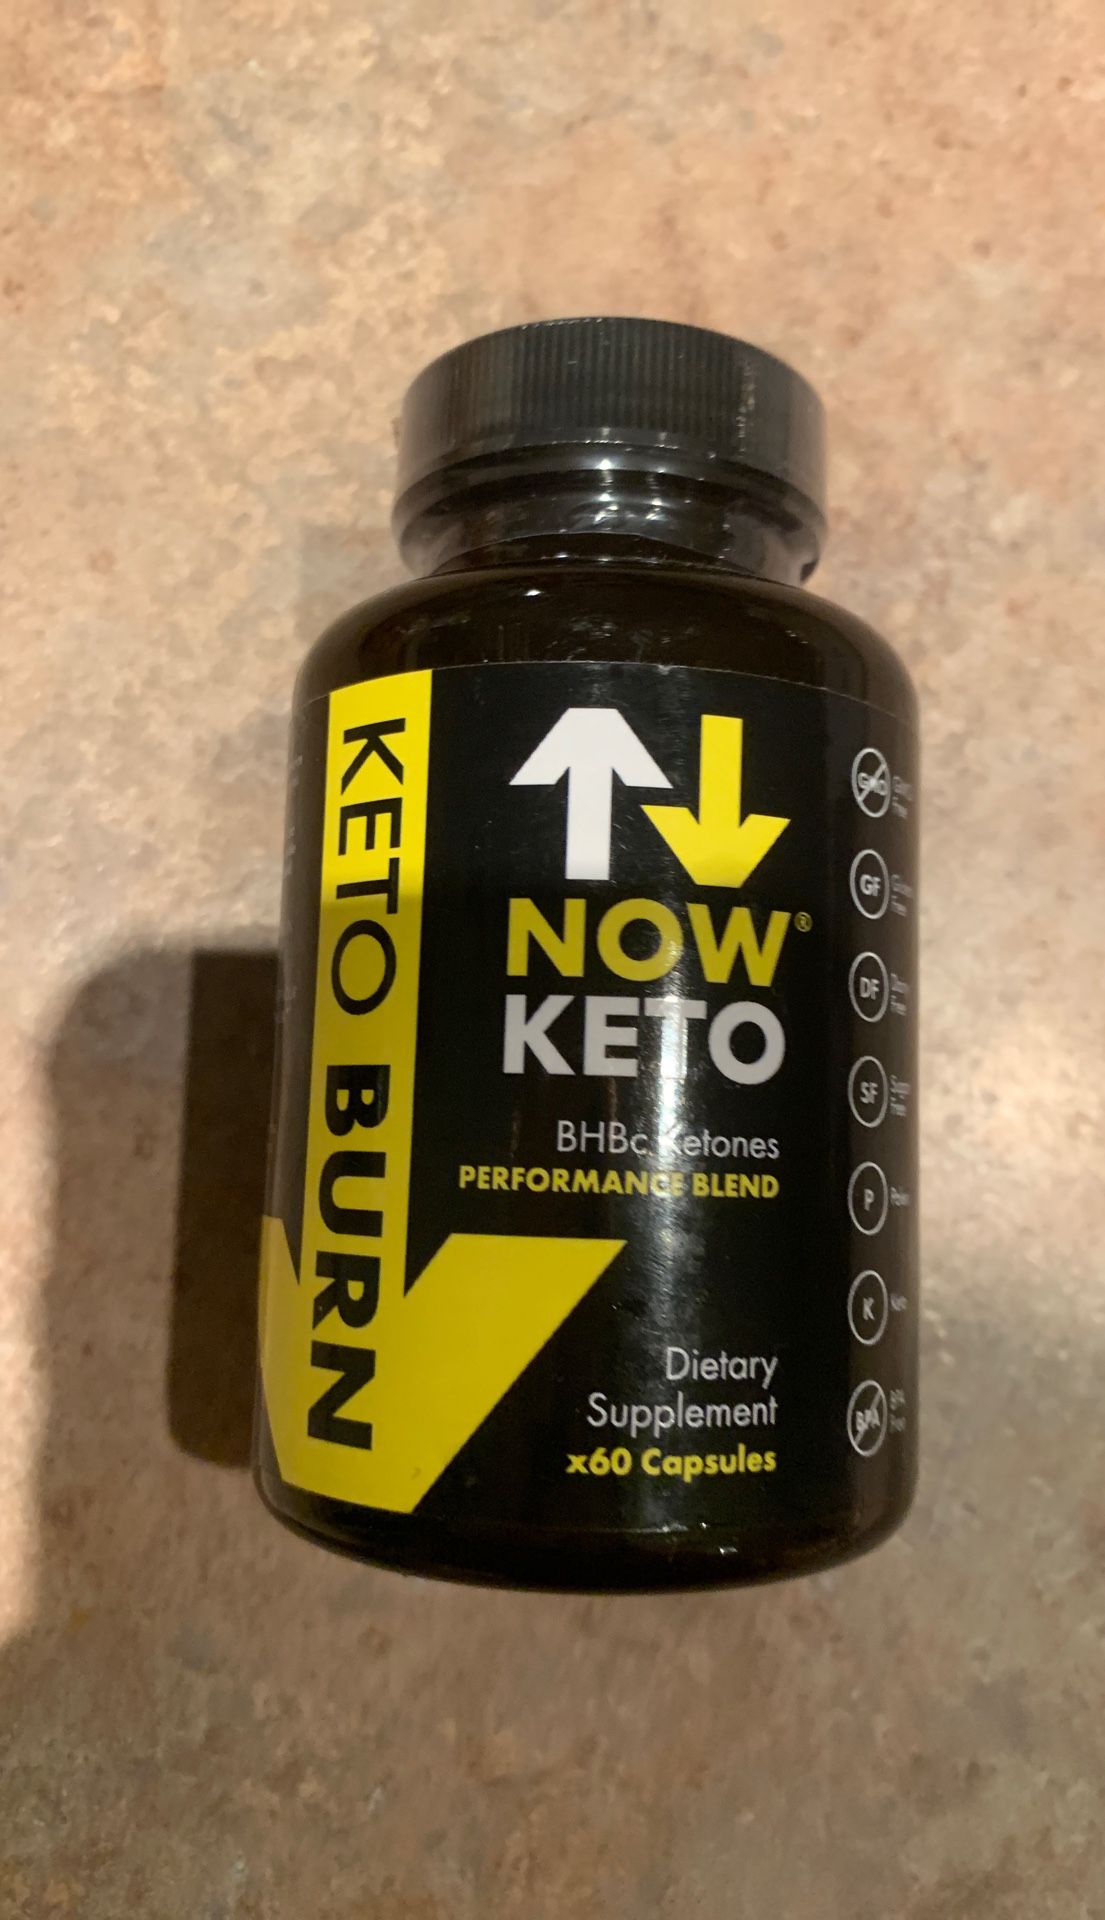 NowKETO supplements